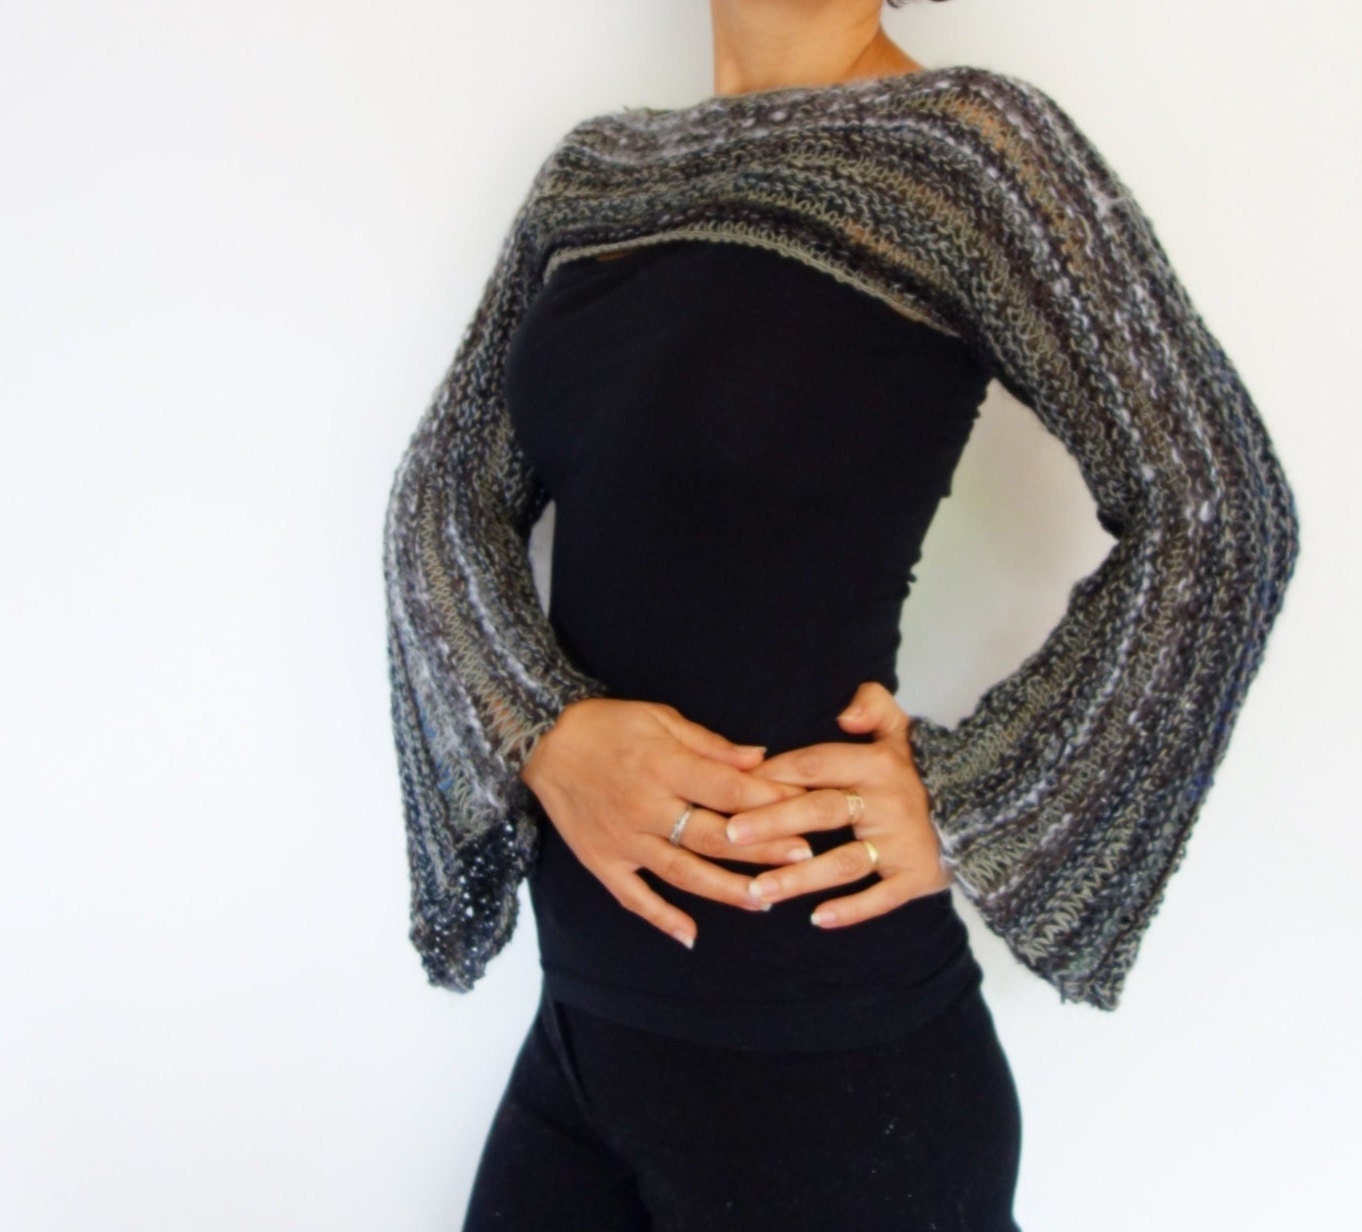 Knitting PATTERN Shredded Crop Sweater/ Loose Knit Boho 